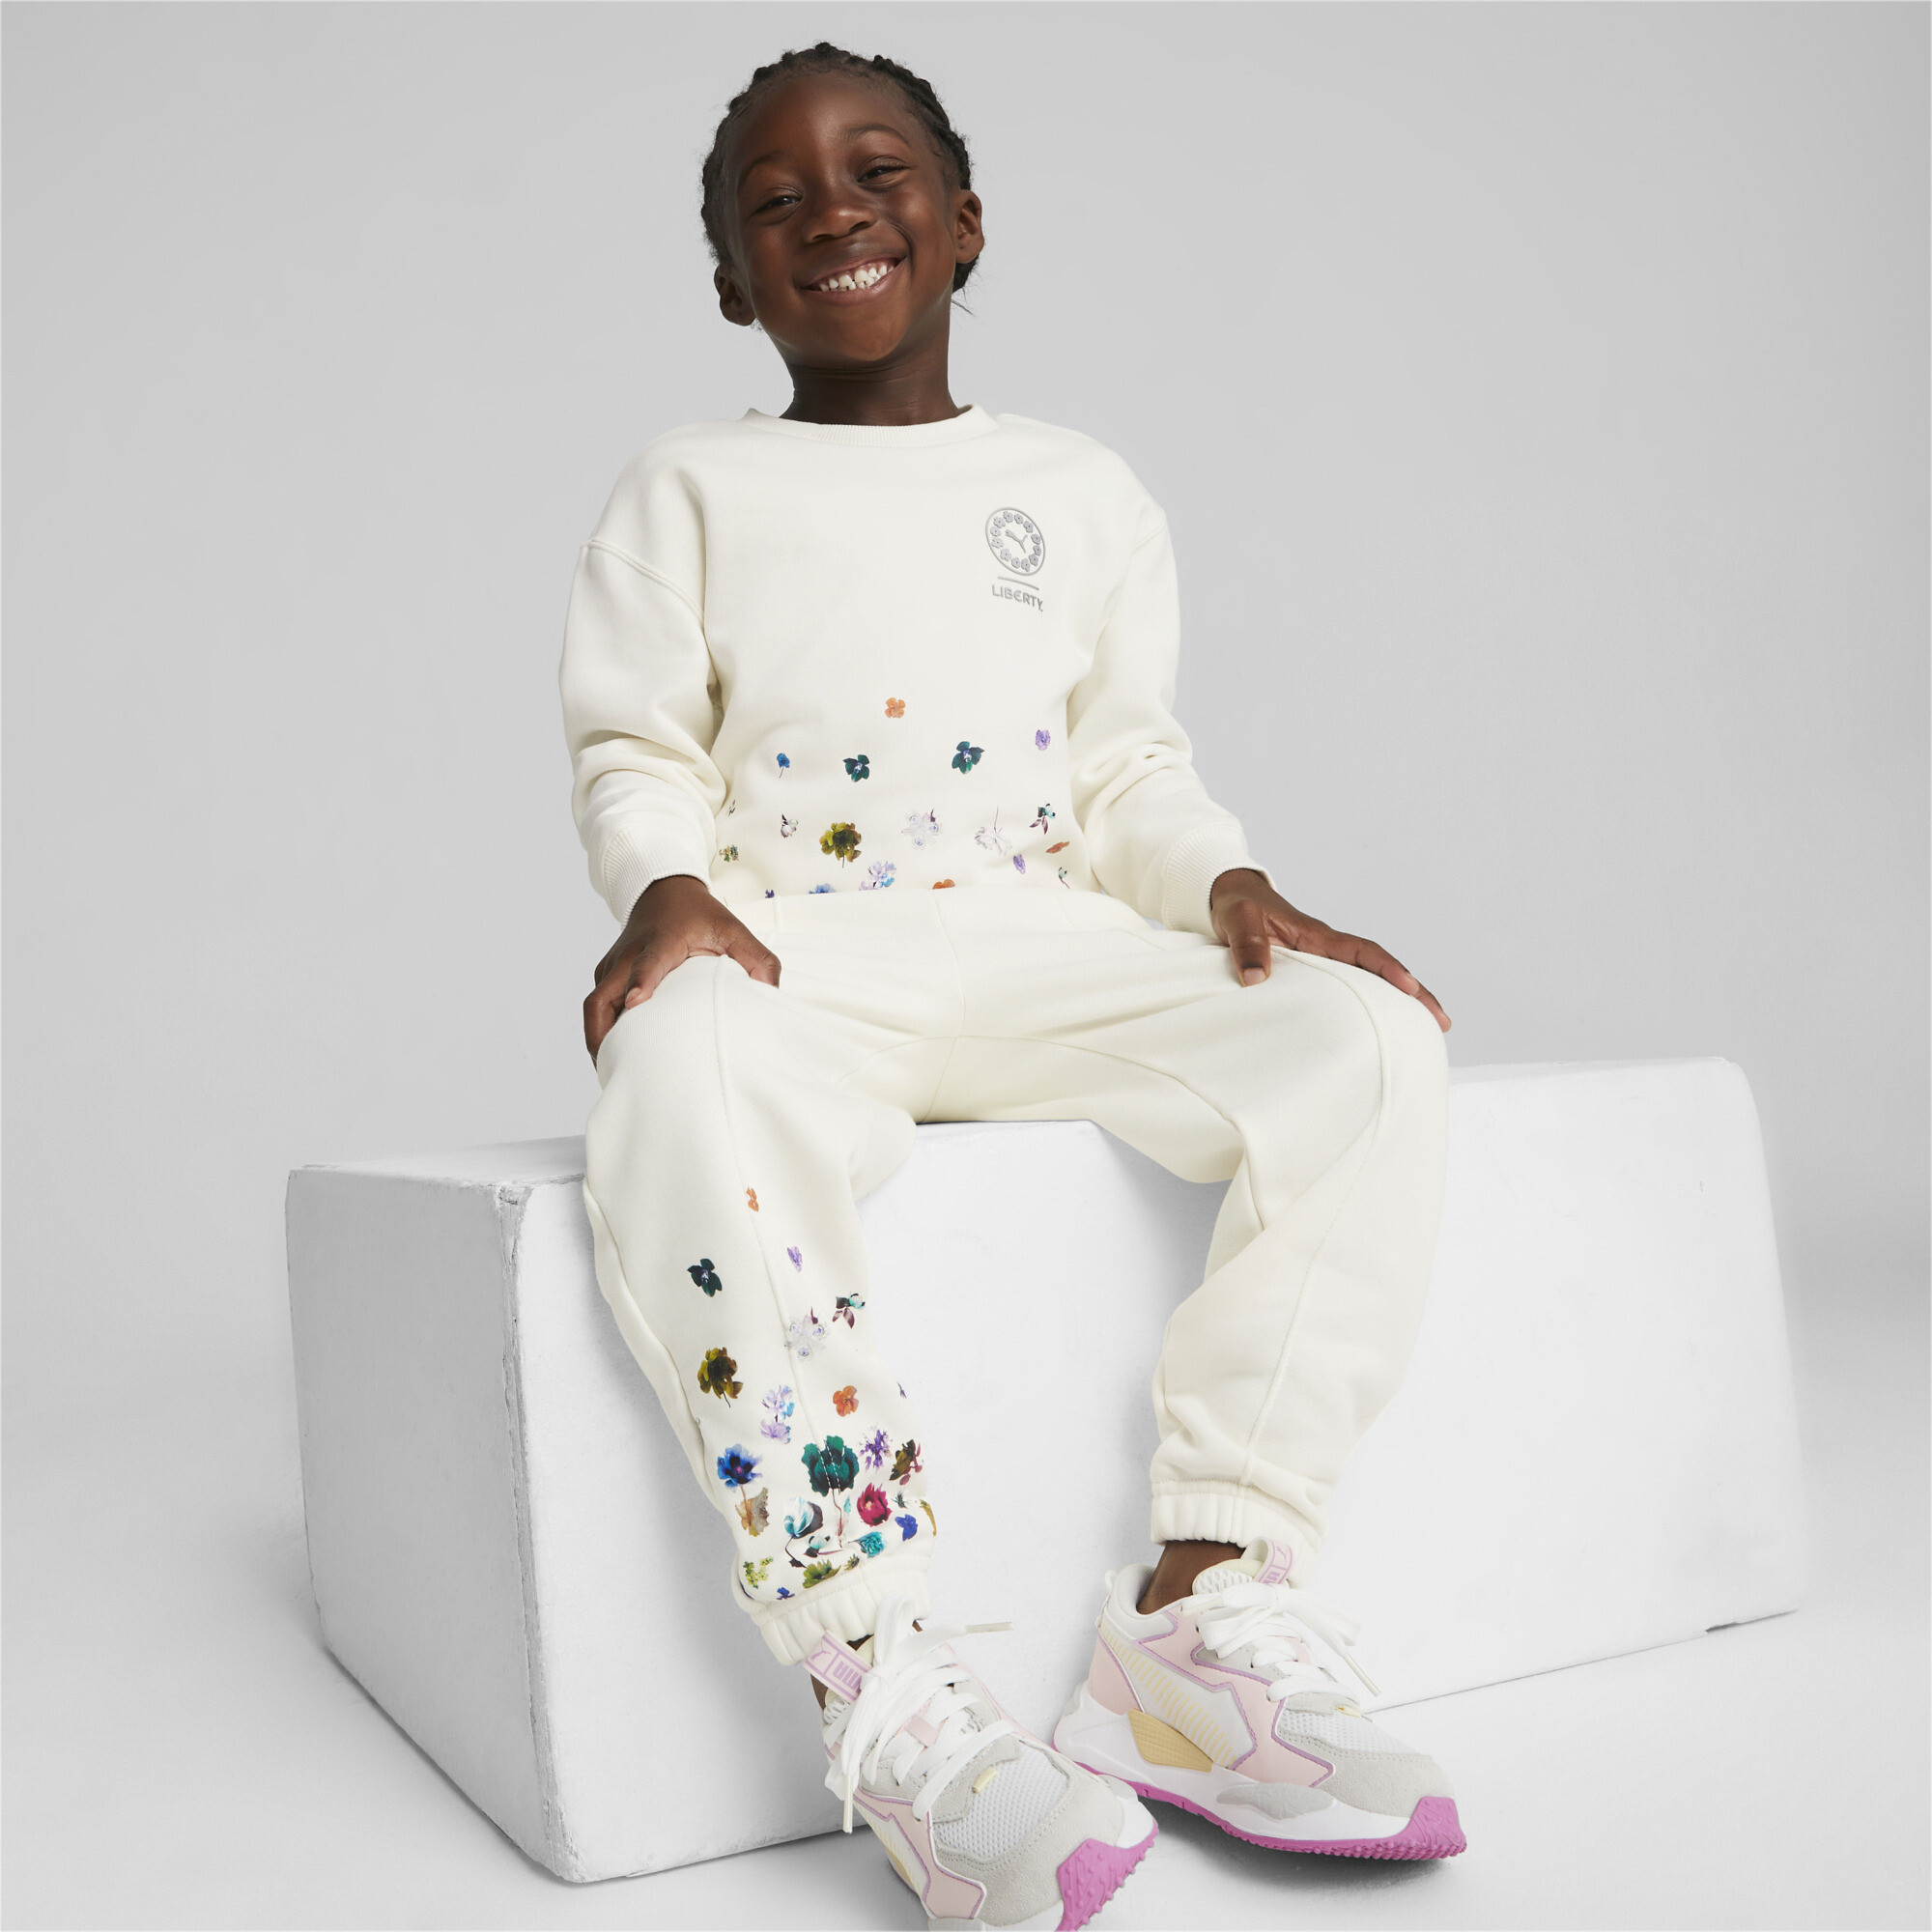 Puma X LIBERTY Kids' Sweatshirt, White, Size 7-8Y, Clothing